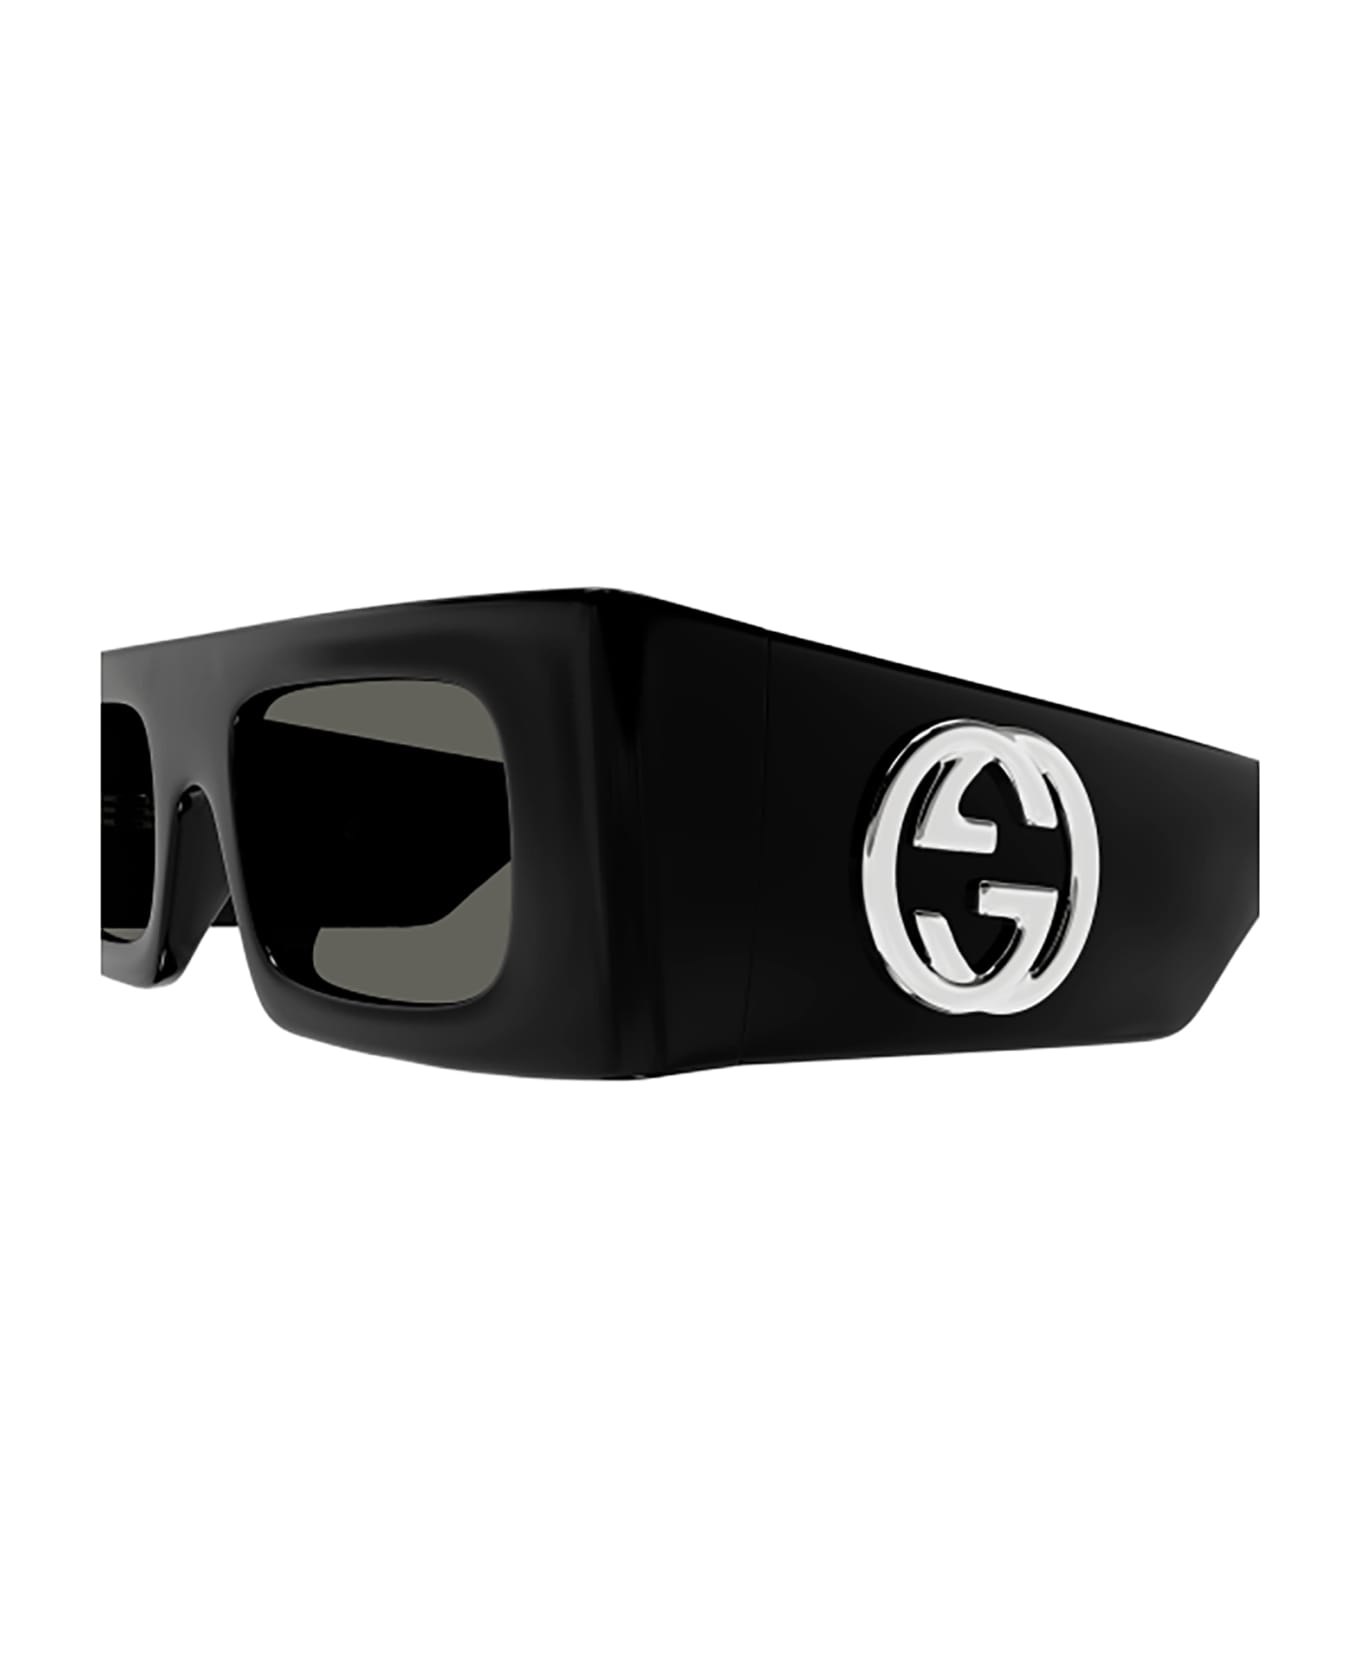 Gucci Eyewear GG1646S Sunglasses - Black Black Grey